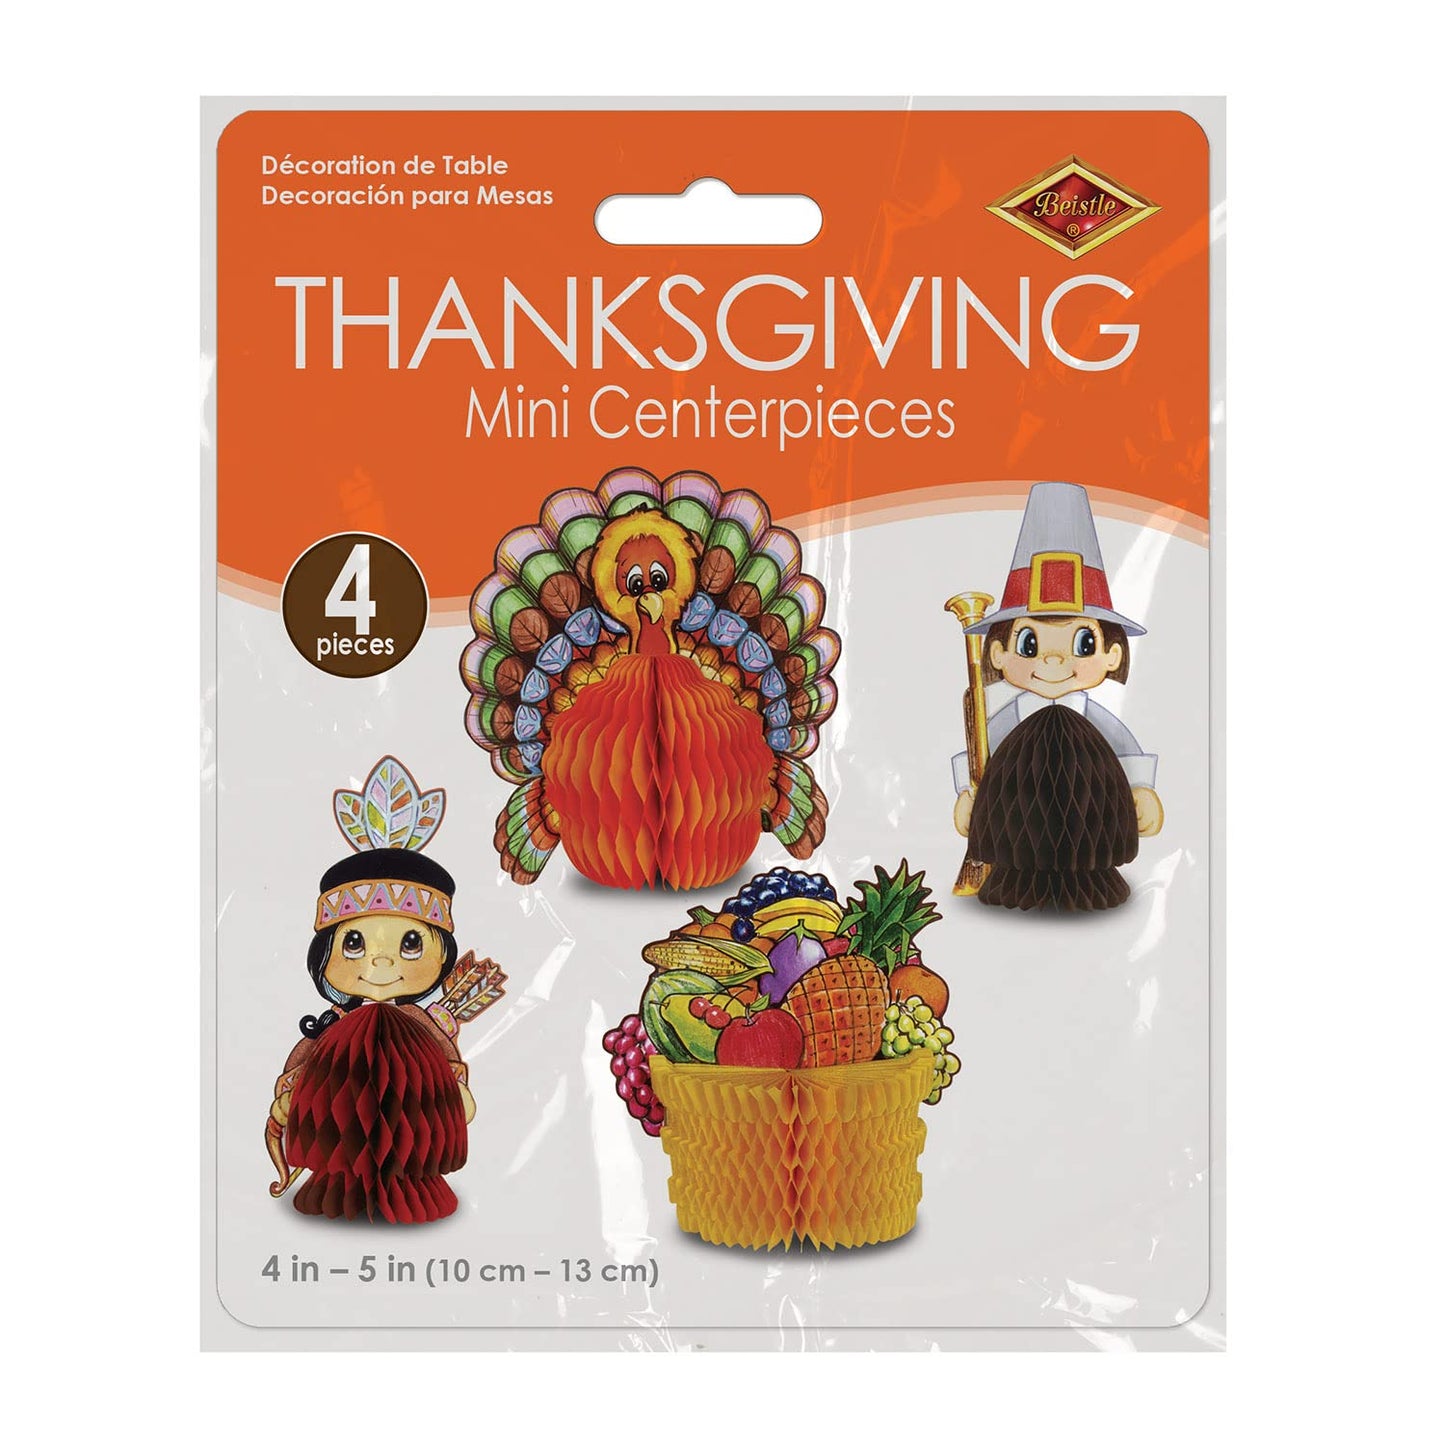 Thanksgiving mini centrepieces